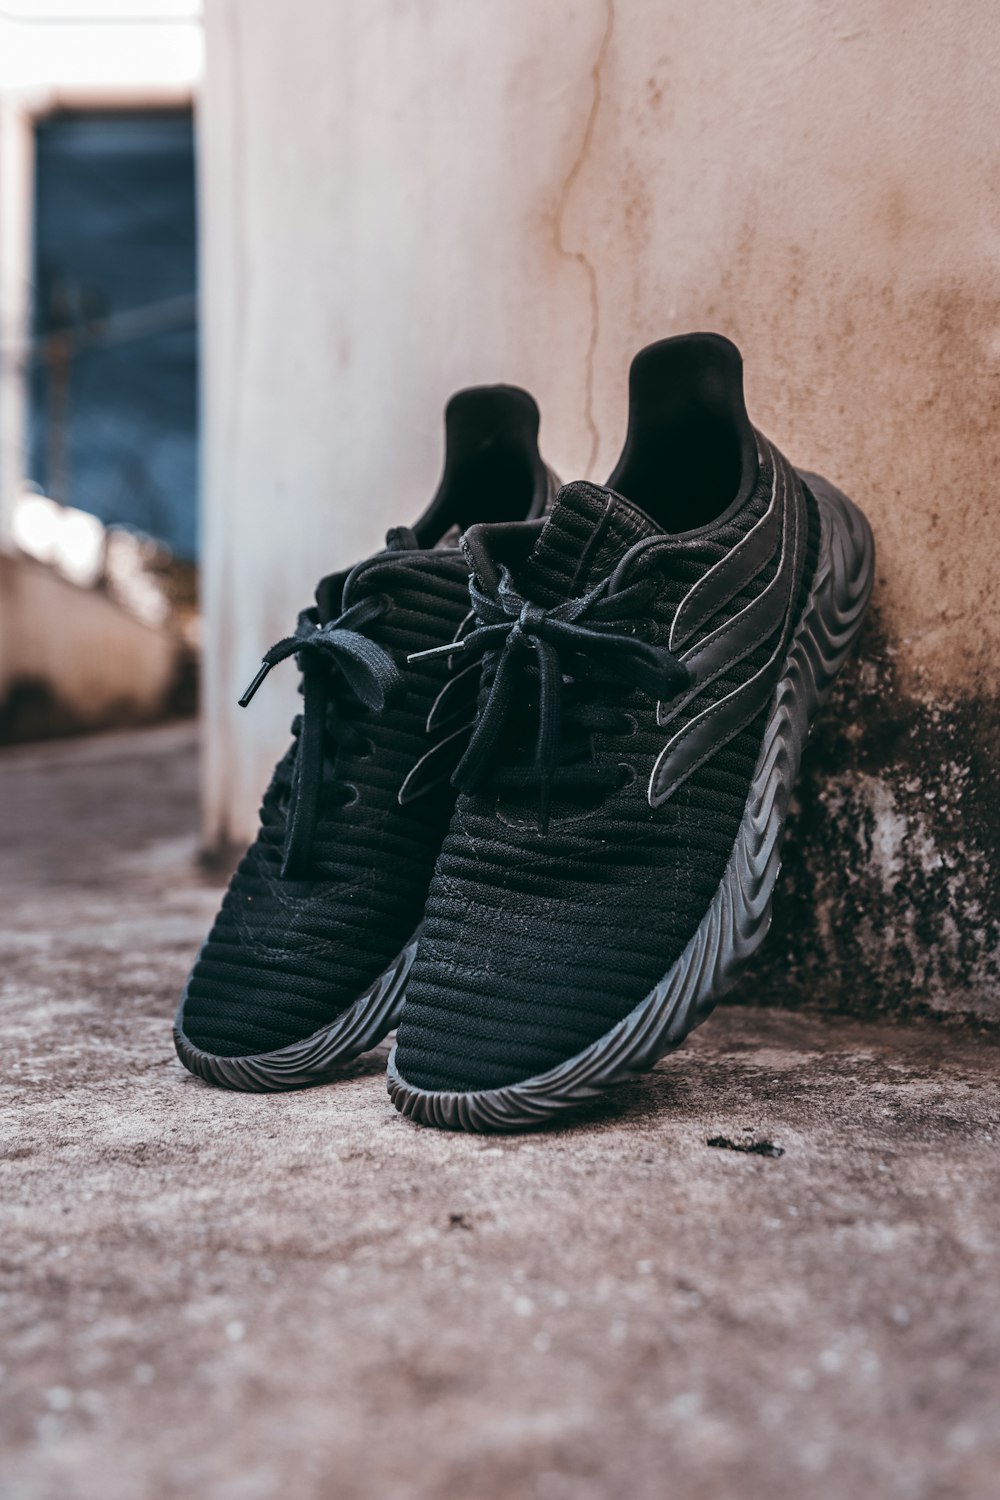 Foto Adidas yeezy boost 350 v blancas y negras – Imagen Negro Unsplash